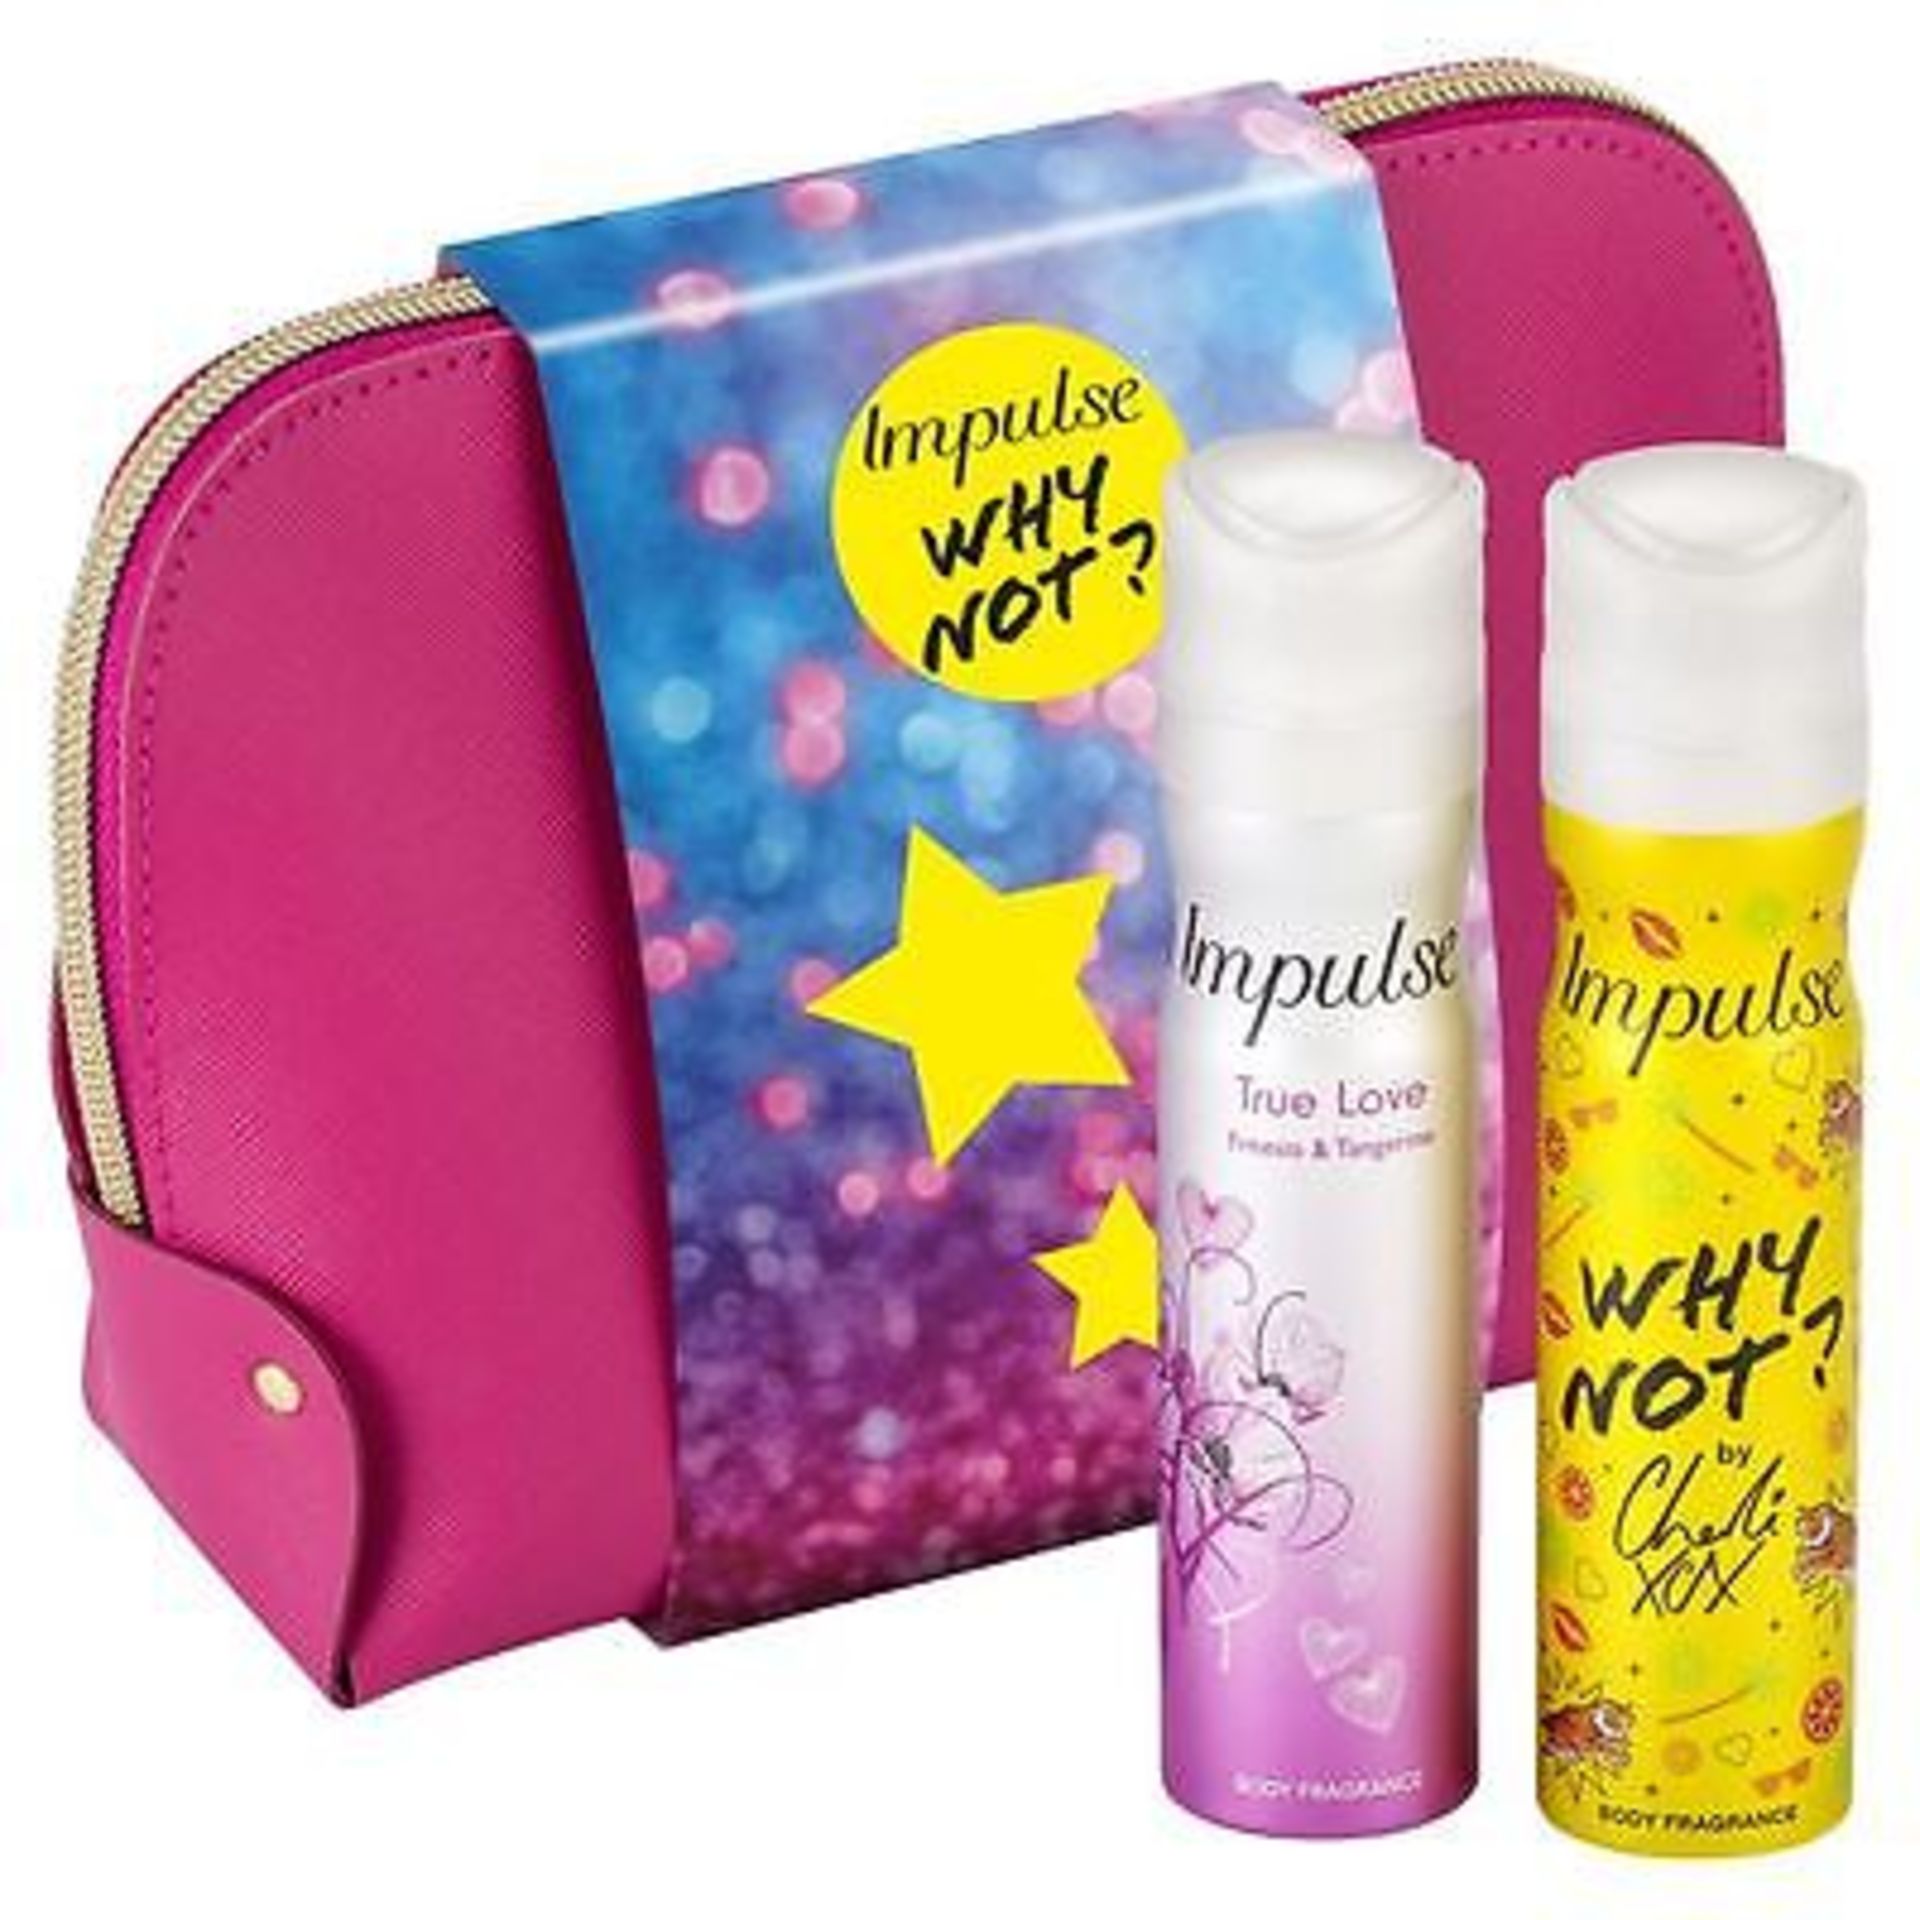 V Brand New Impulse Why Not Body Fragrance Gift Set Amazon Price £12.20 - Ebay Price 9.99 Includes